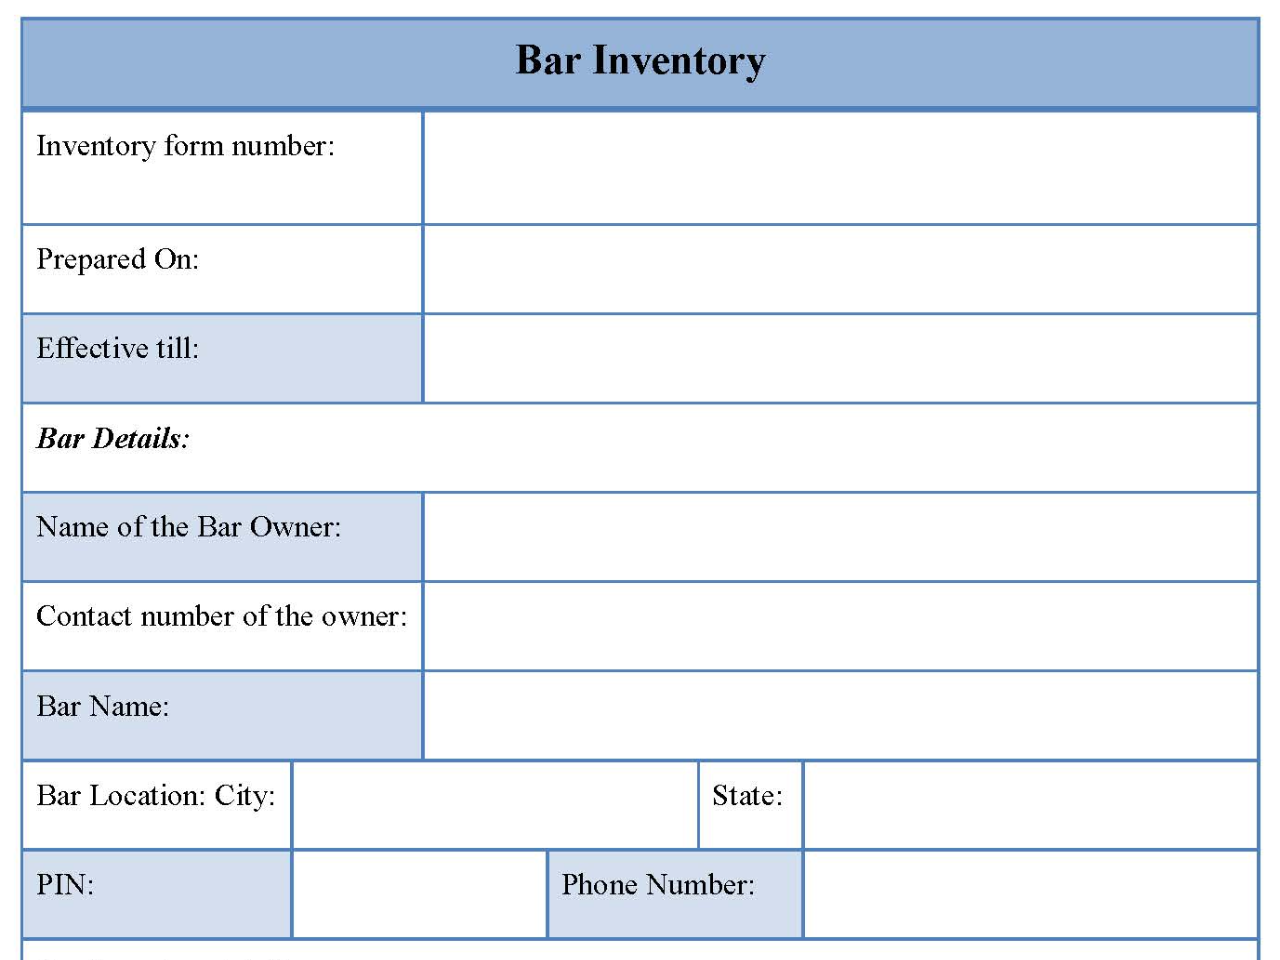 Bar inventory form